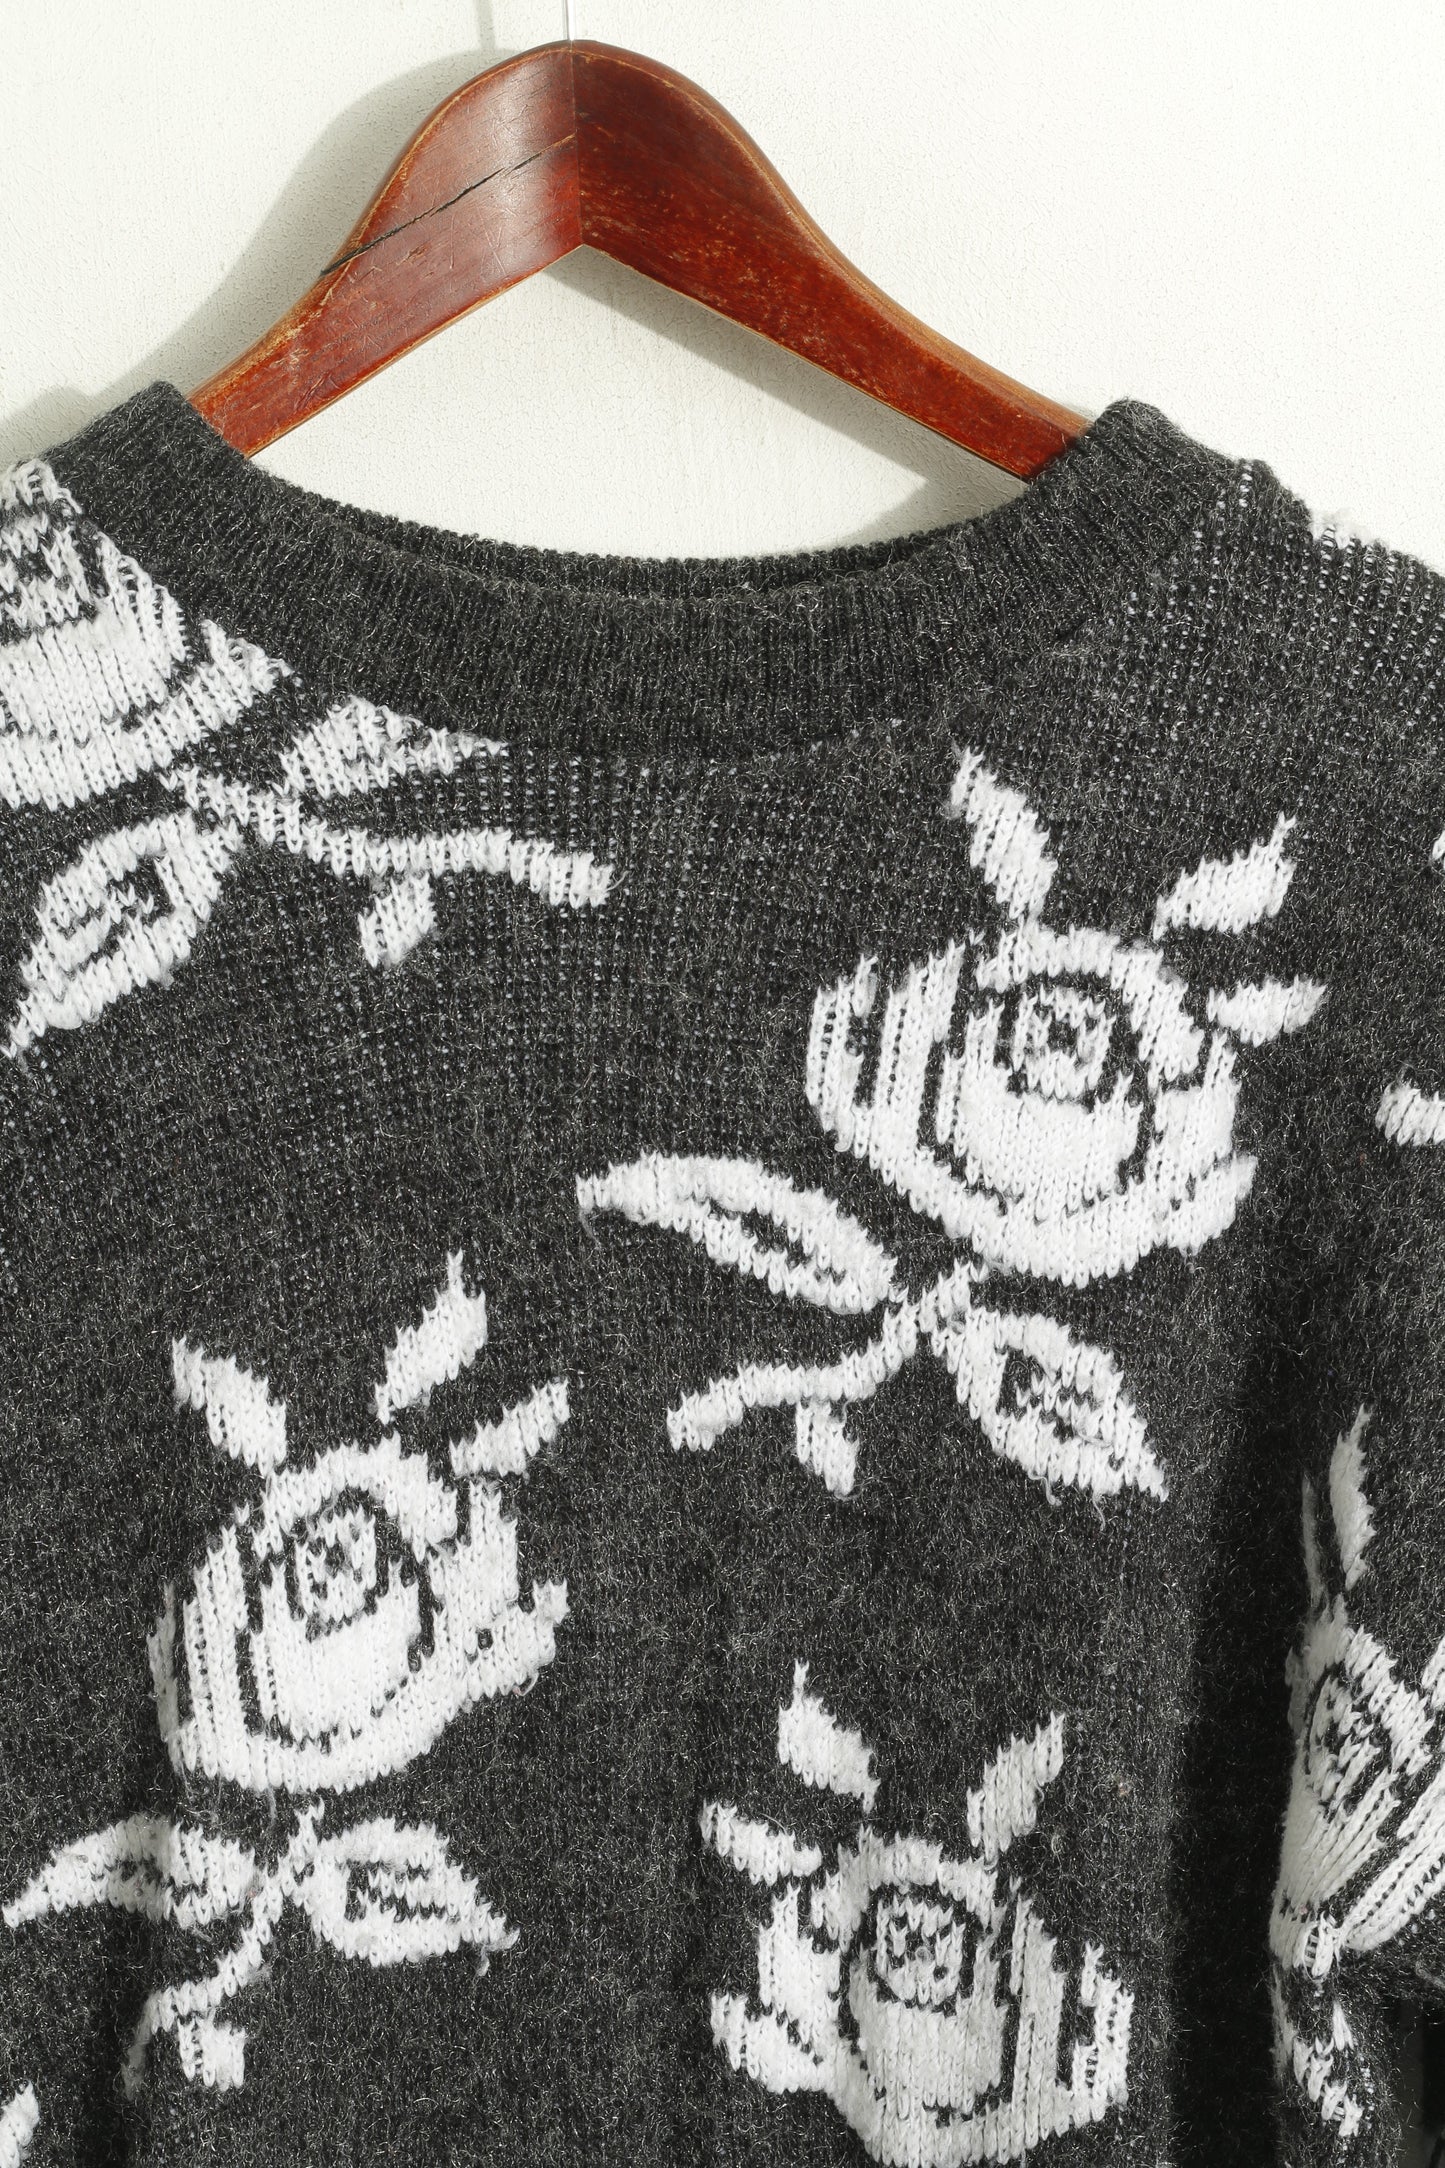 Its Knitwear UK Women S Jumper Shiny Gray White Roses Crew Neck Fuzzy Sweater